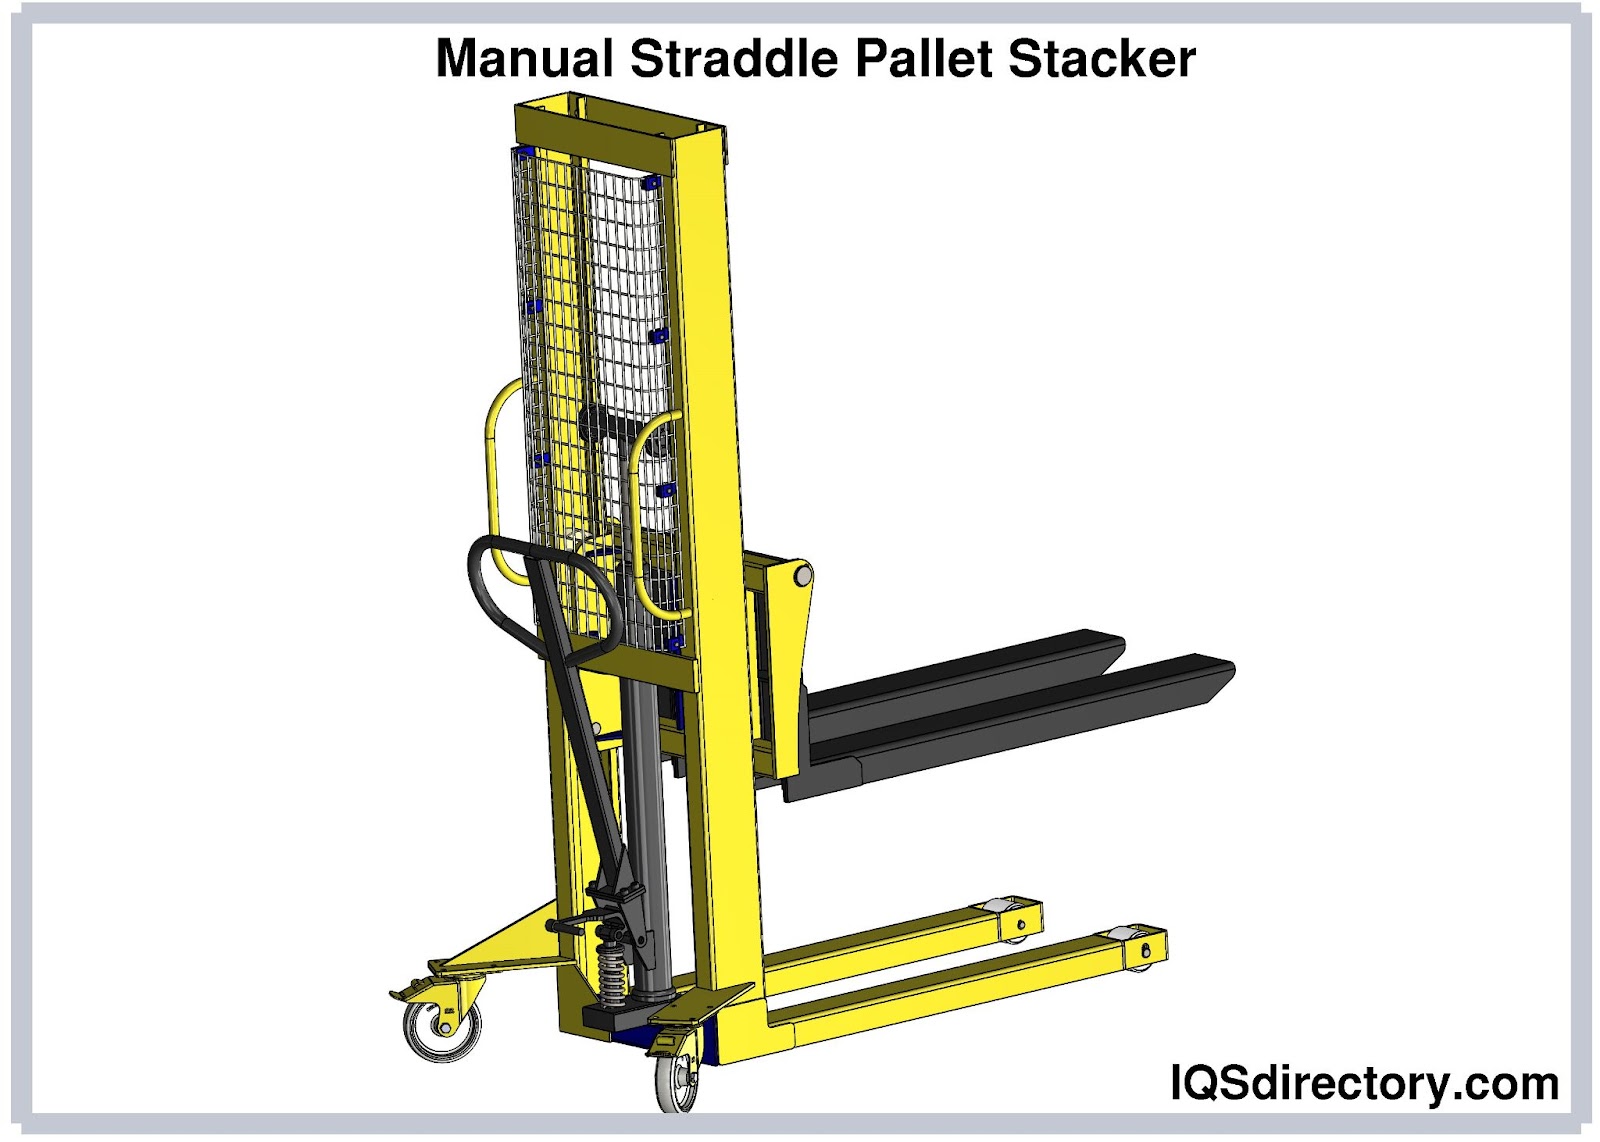 Manual Straddle Pallet Stacker